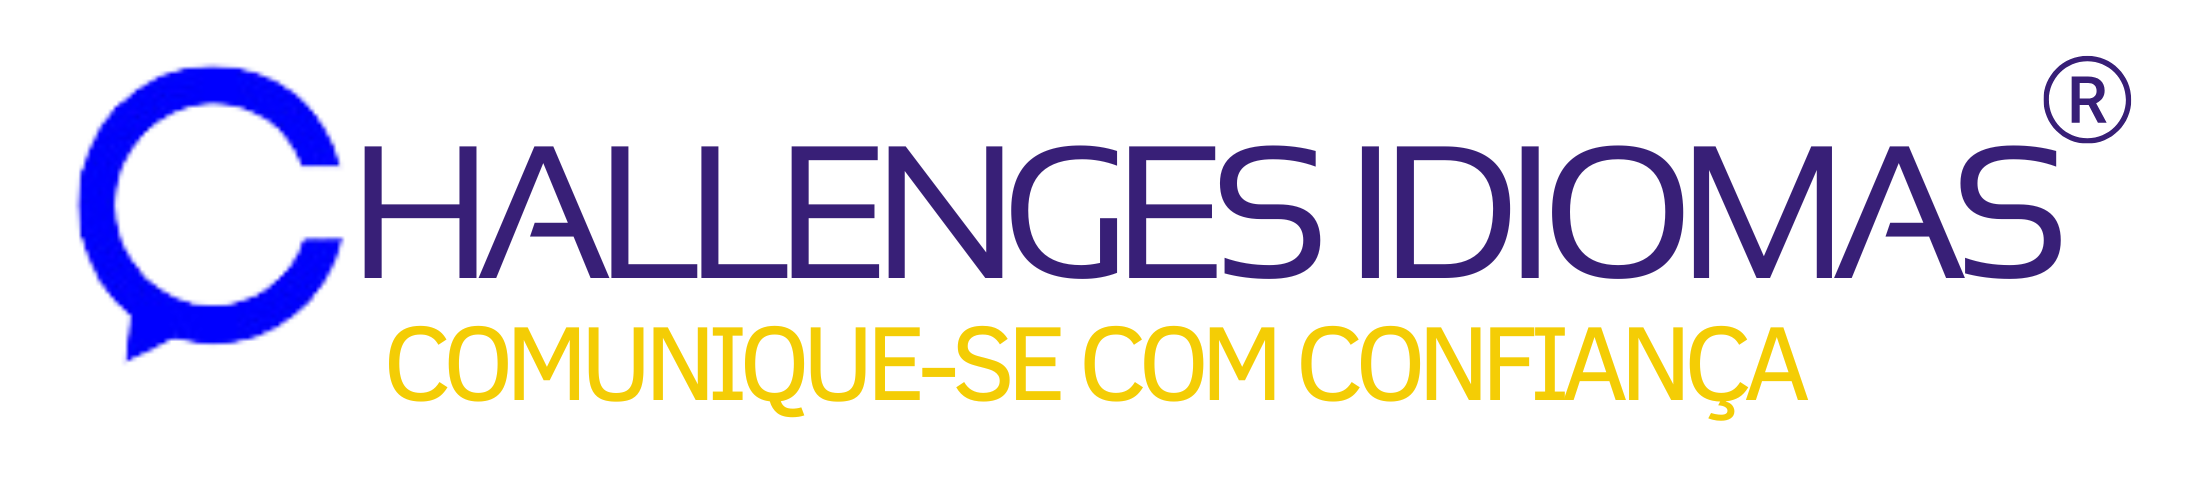 (c) Challenges.com.br